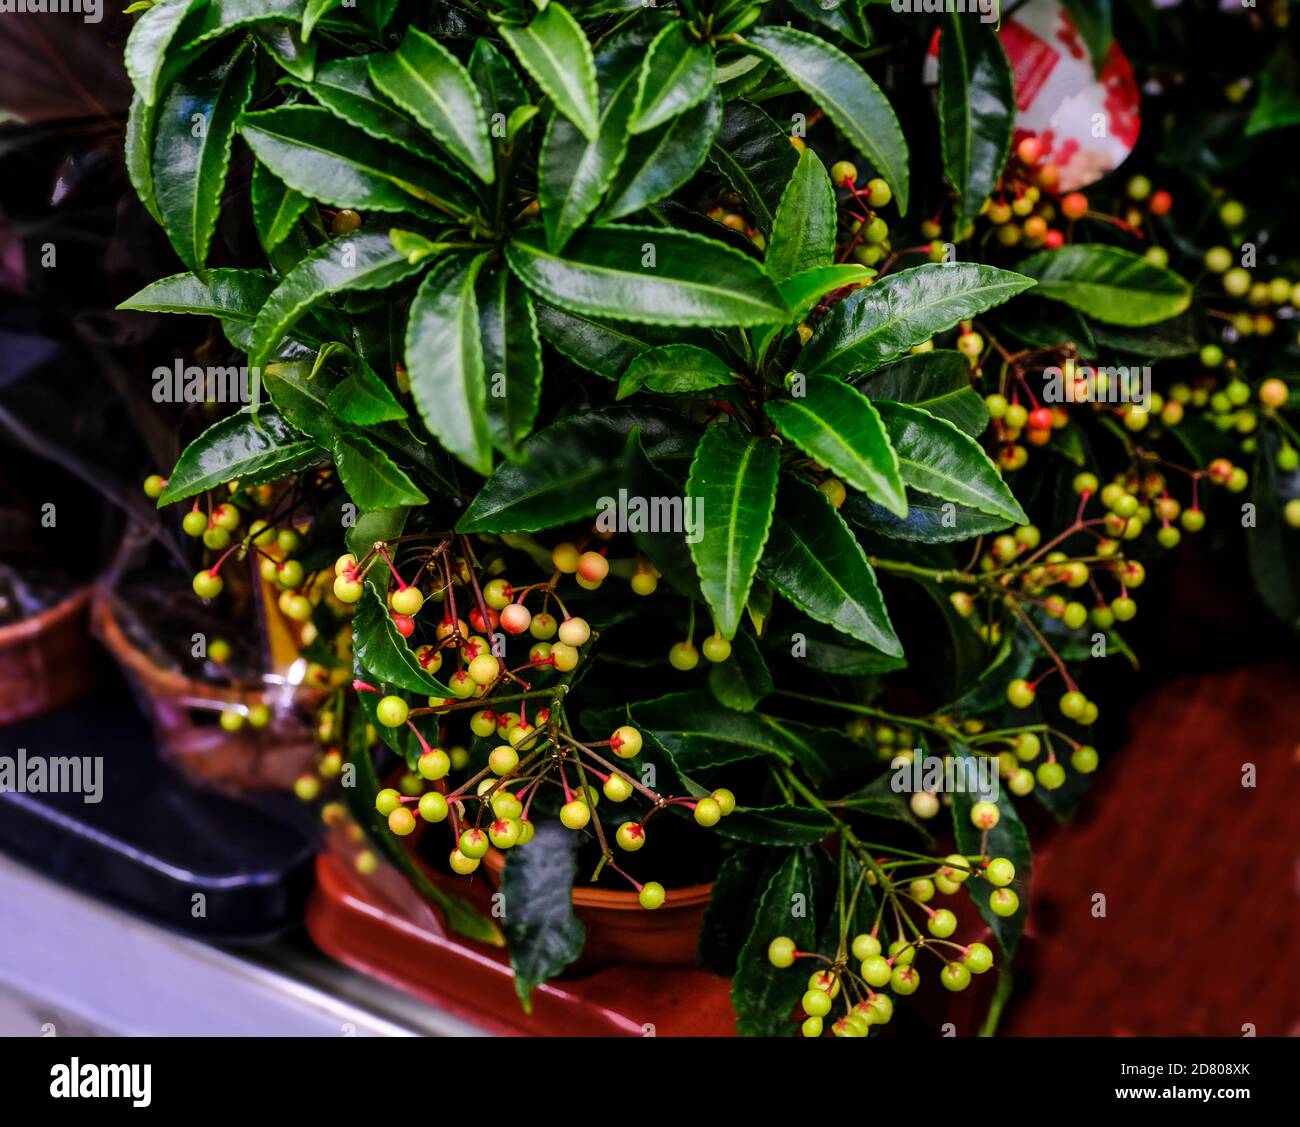 green leafy ardisia crenata berry plant at floral market. Selective focus Stock Photo